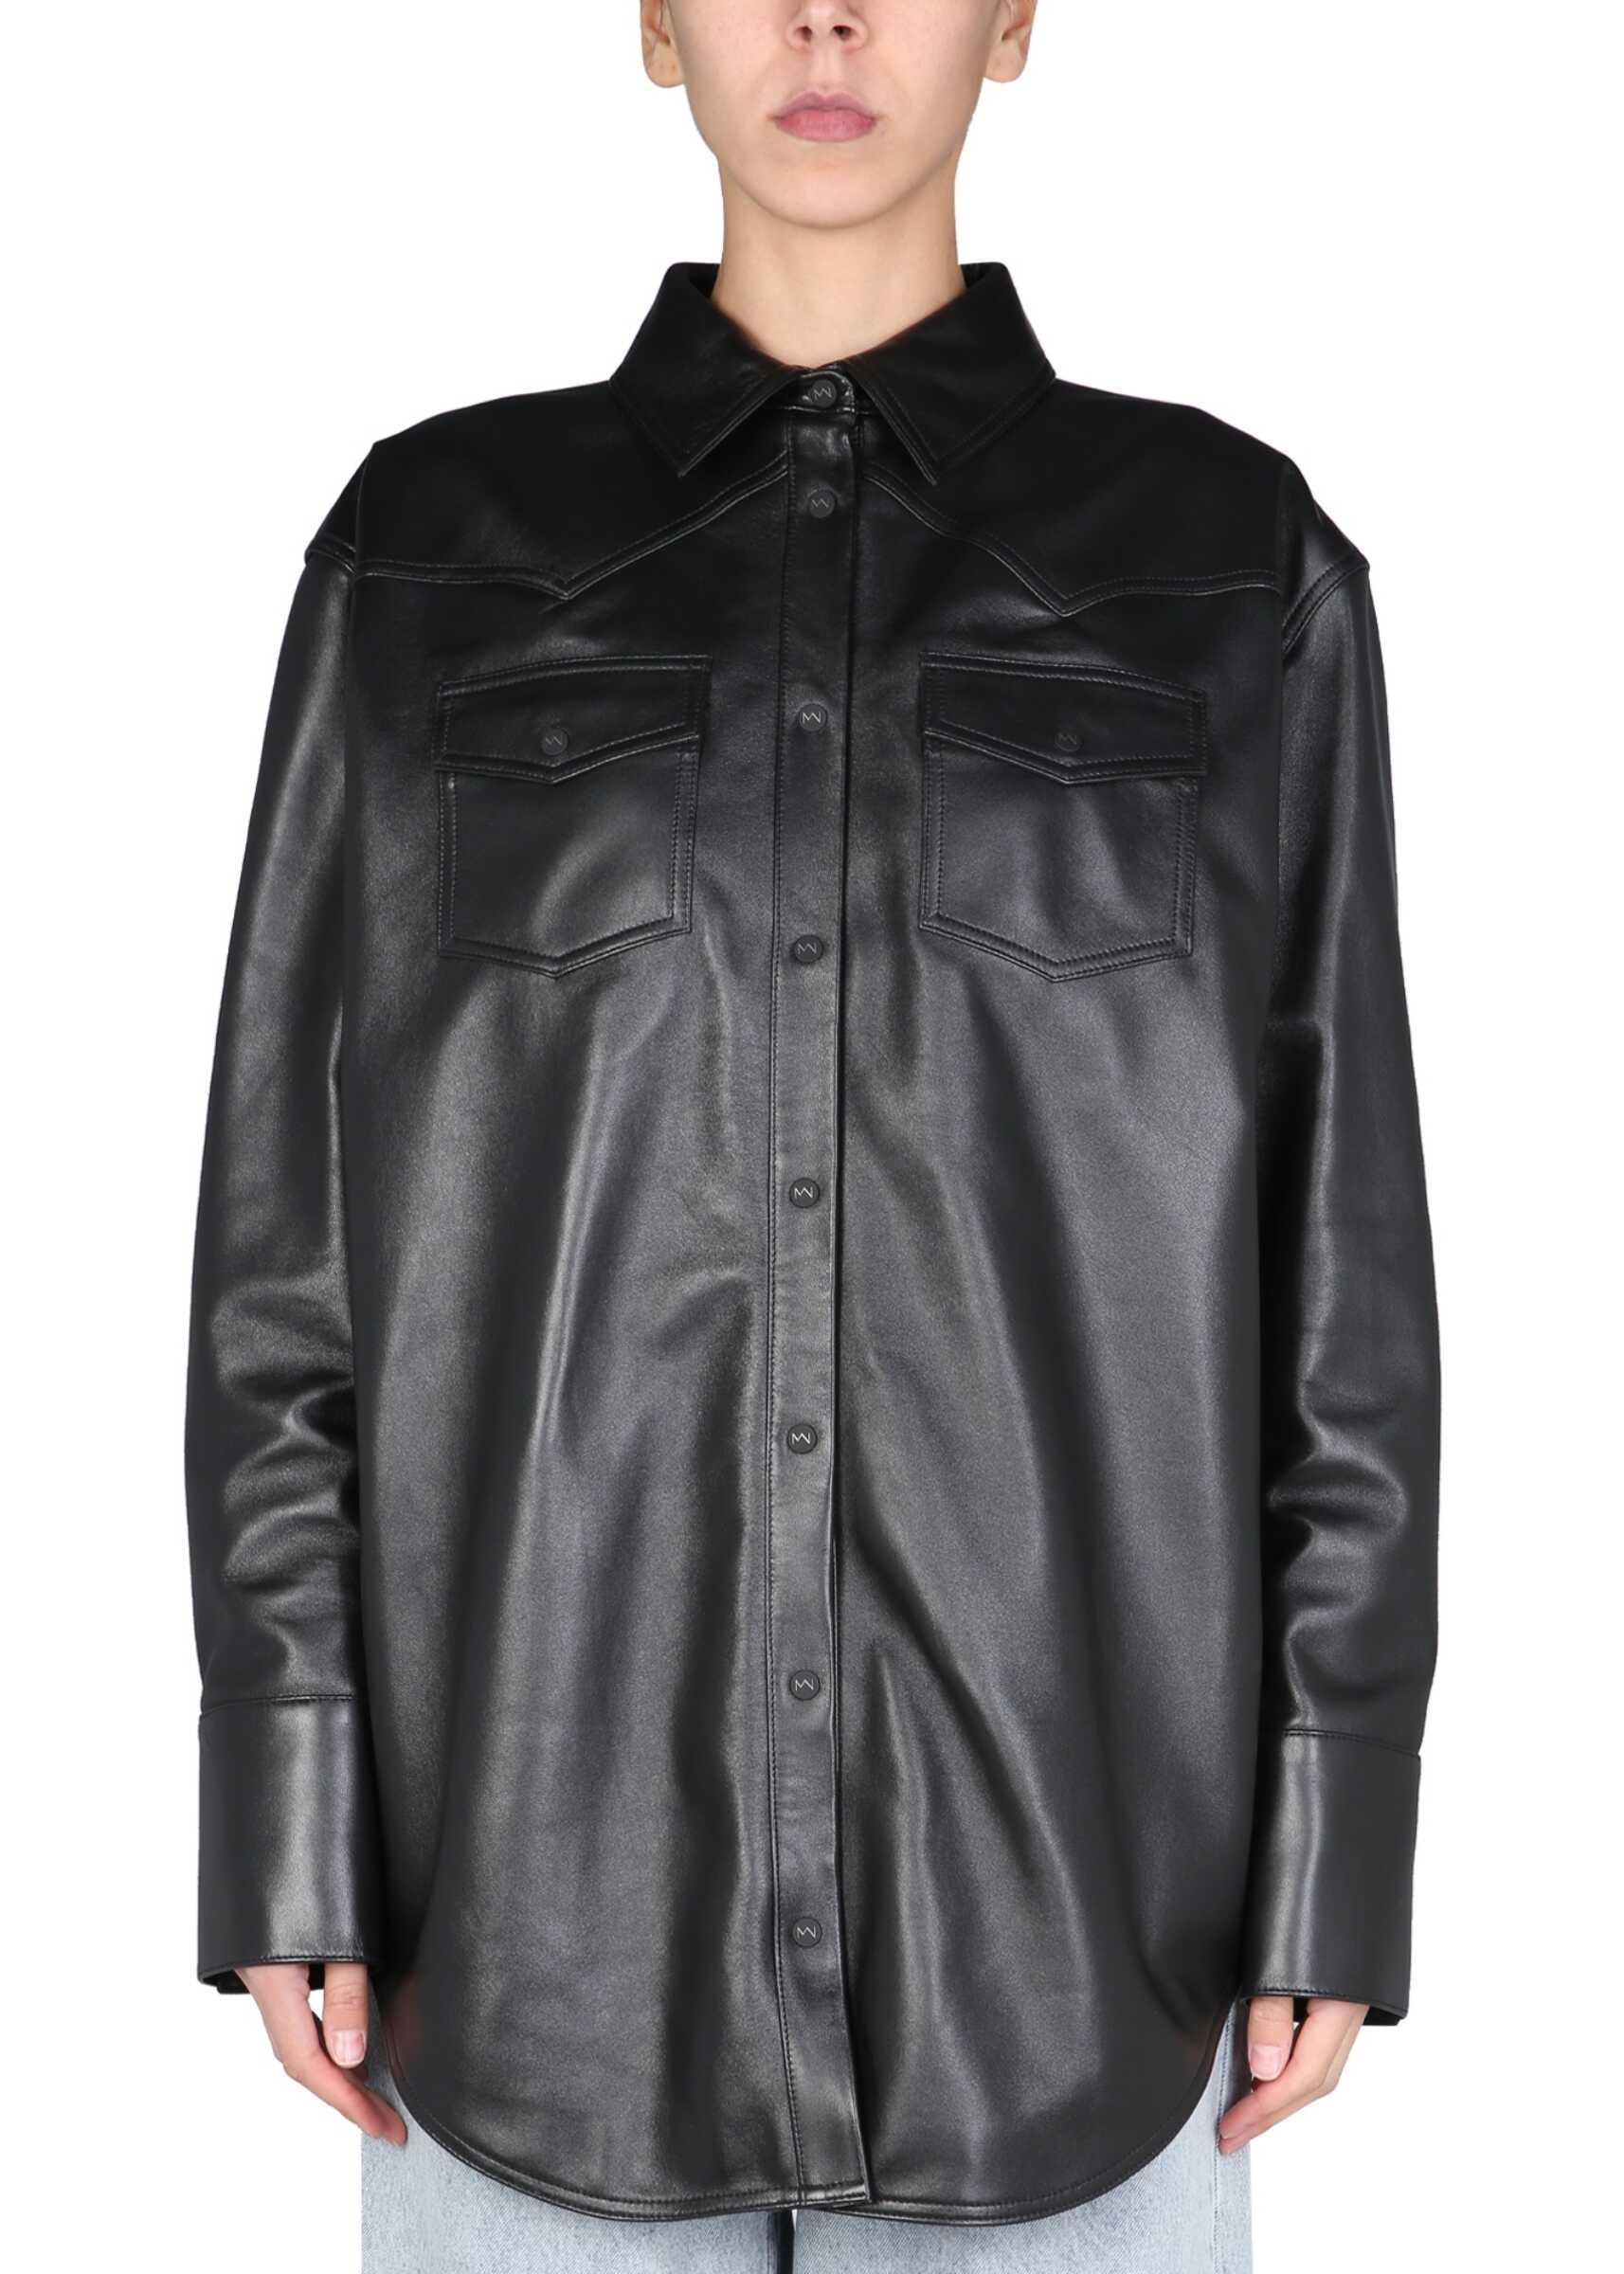 THE MANNEI "Patras" Jacket BLACK